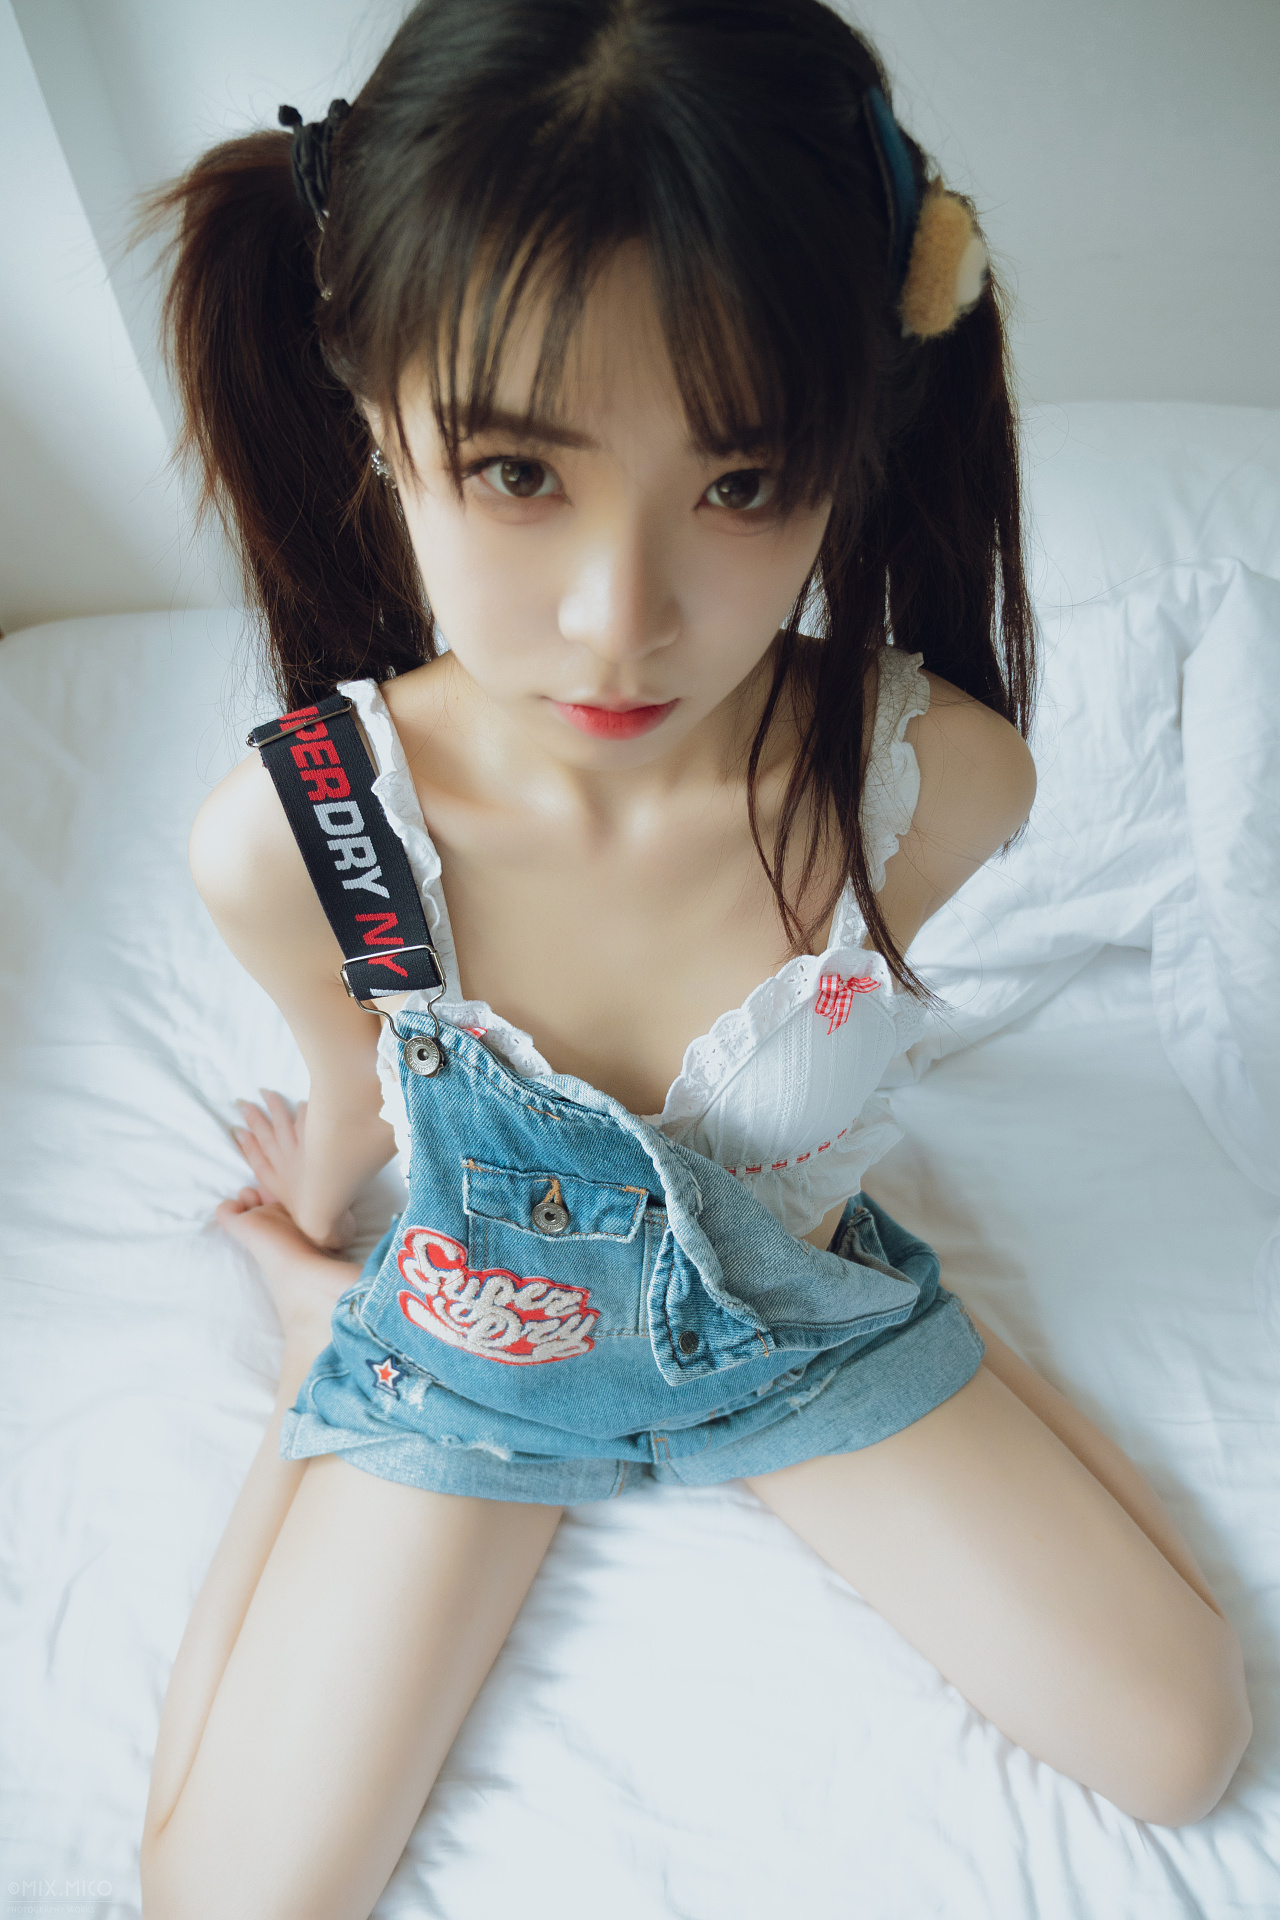 Chinese Model Model Asian Women Teen Twintails Brunette Dark Hair Pale Legs Barefoot Feet Sitting In 1280x1920